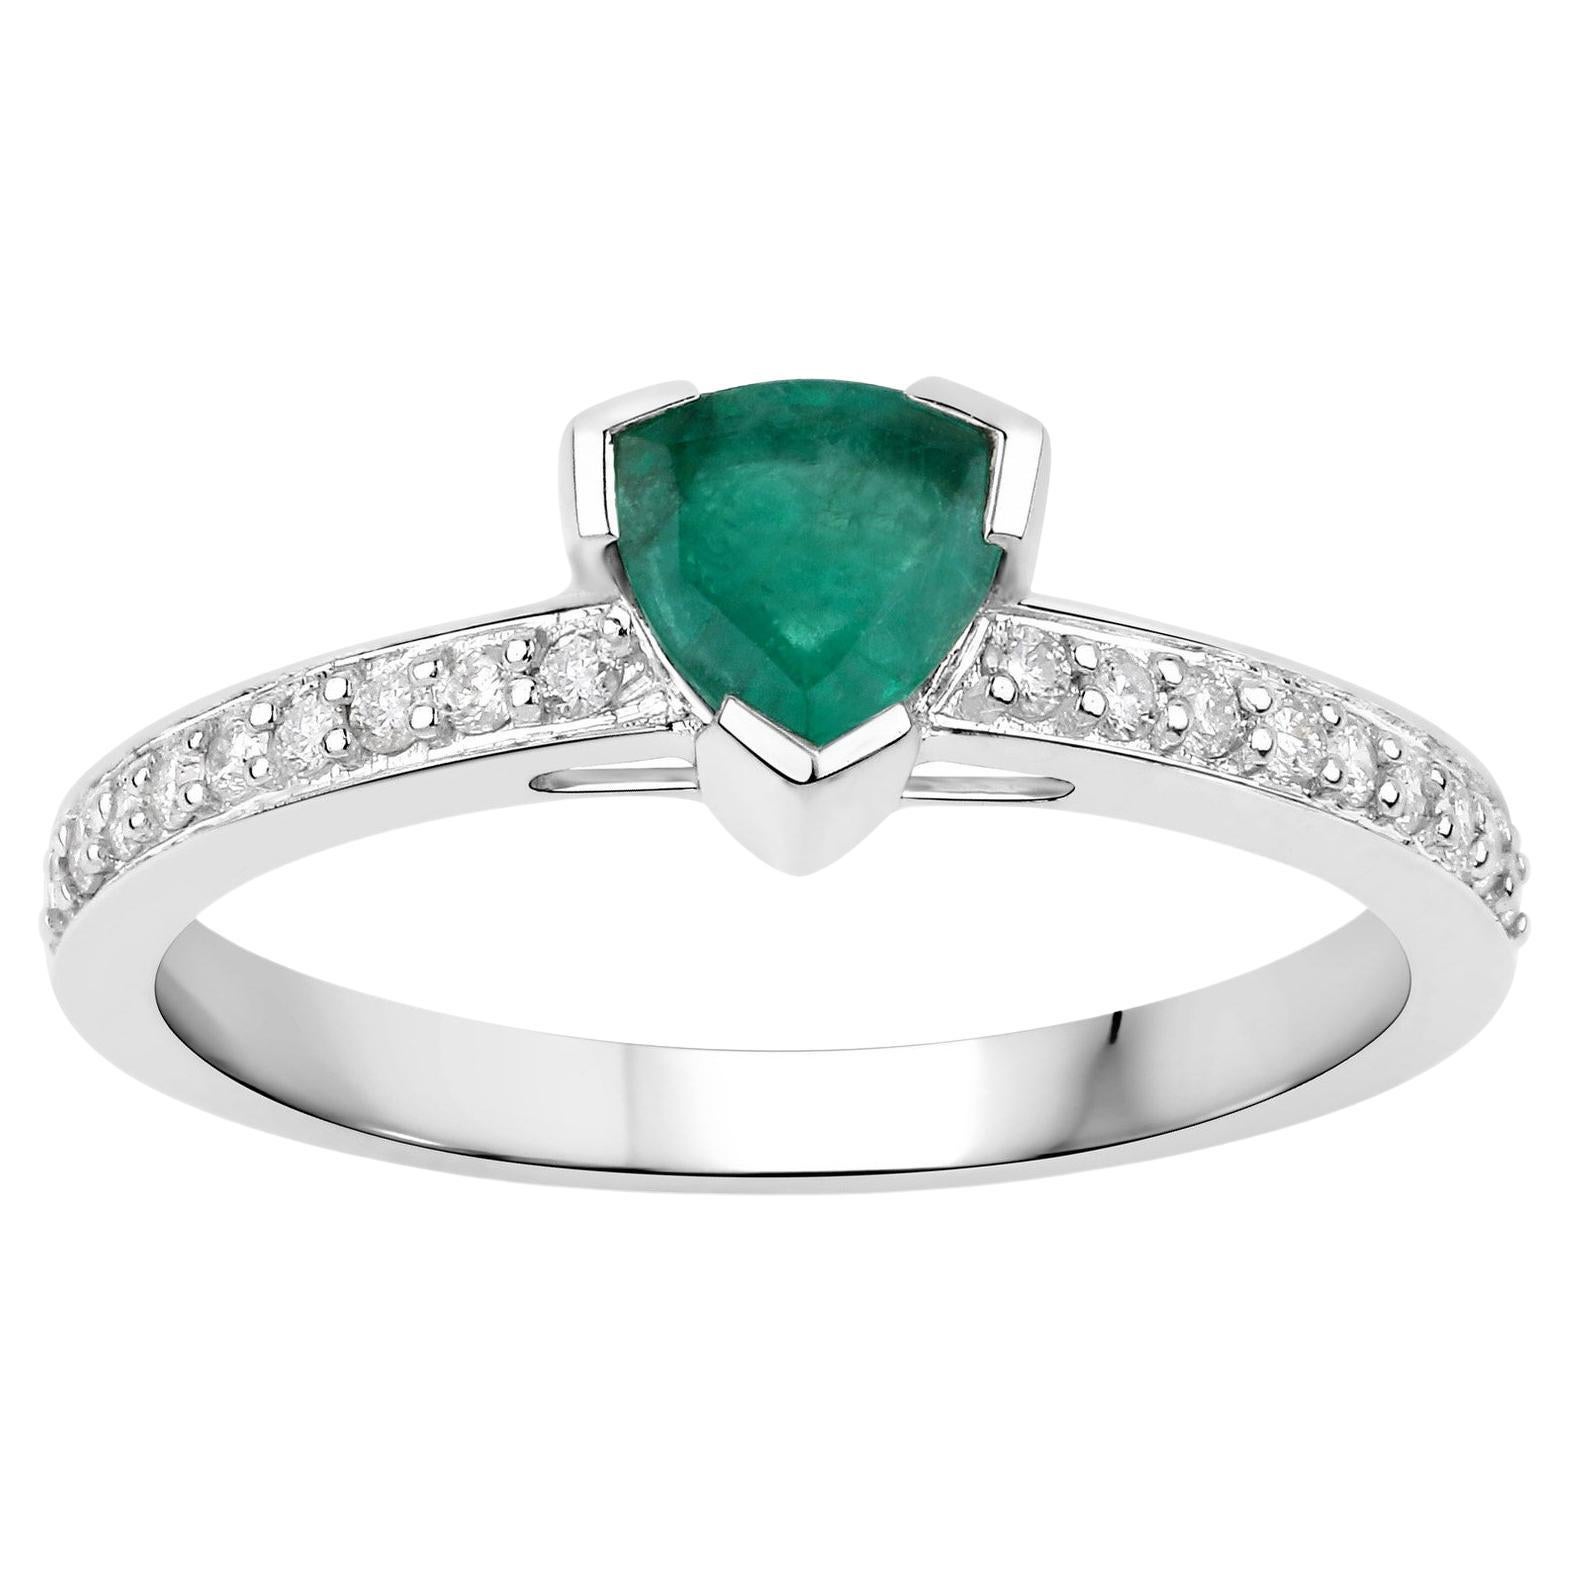 Naturelle Zambian Trillion Cut Emerald Ring Diamond Setting 14K White Gold